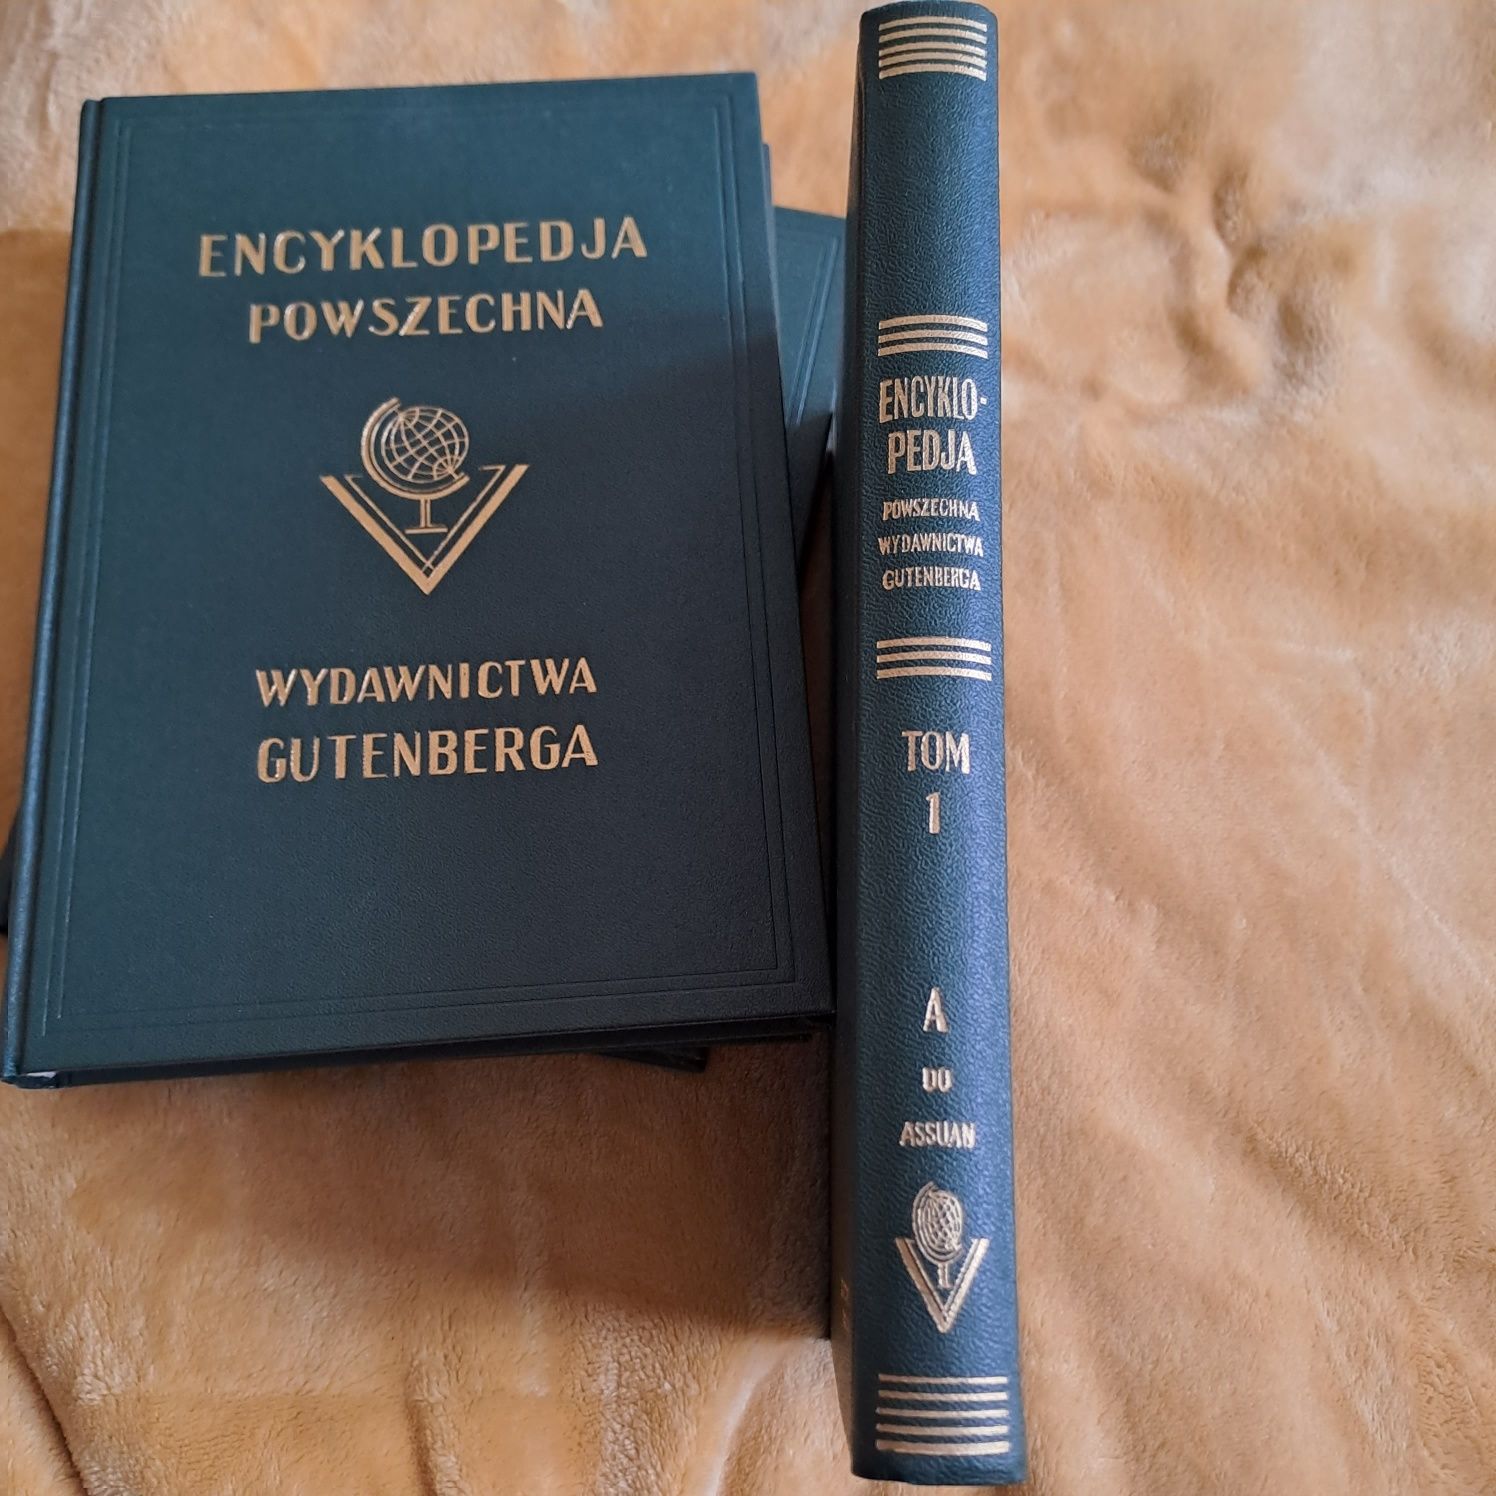 Encyklopedia powszechna wydawnictwa Gutenberga Tom 1